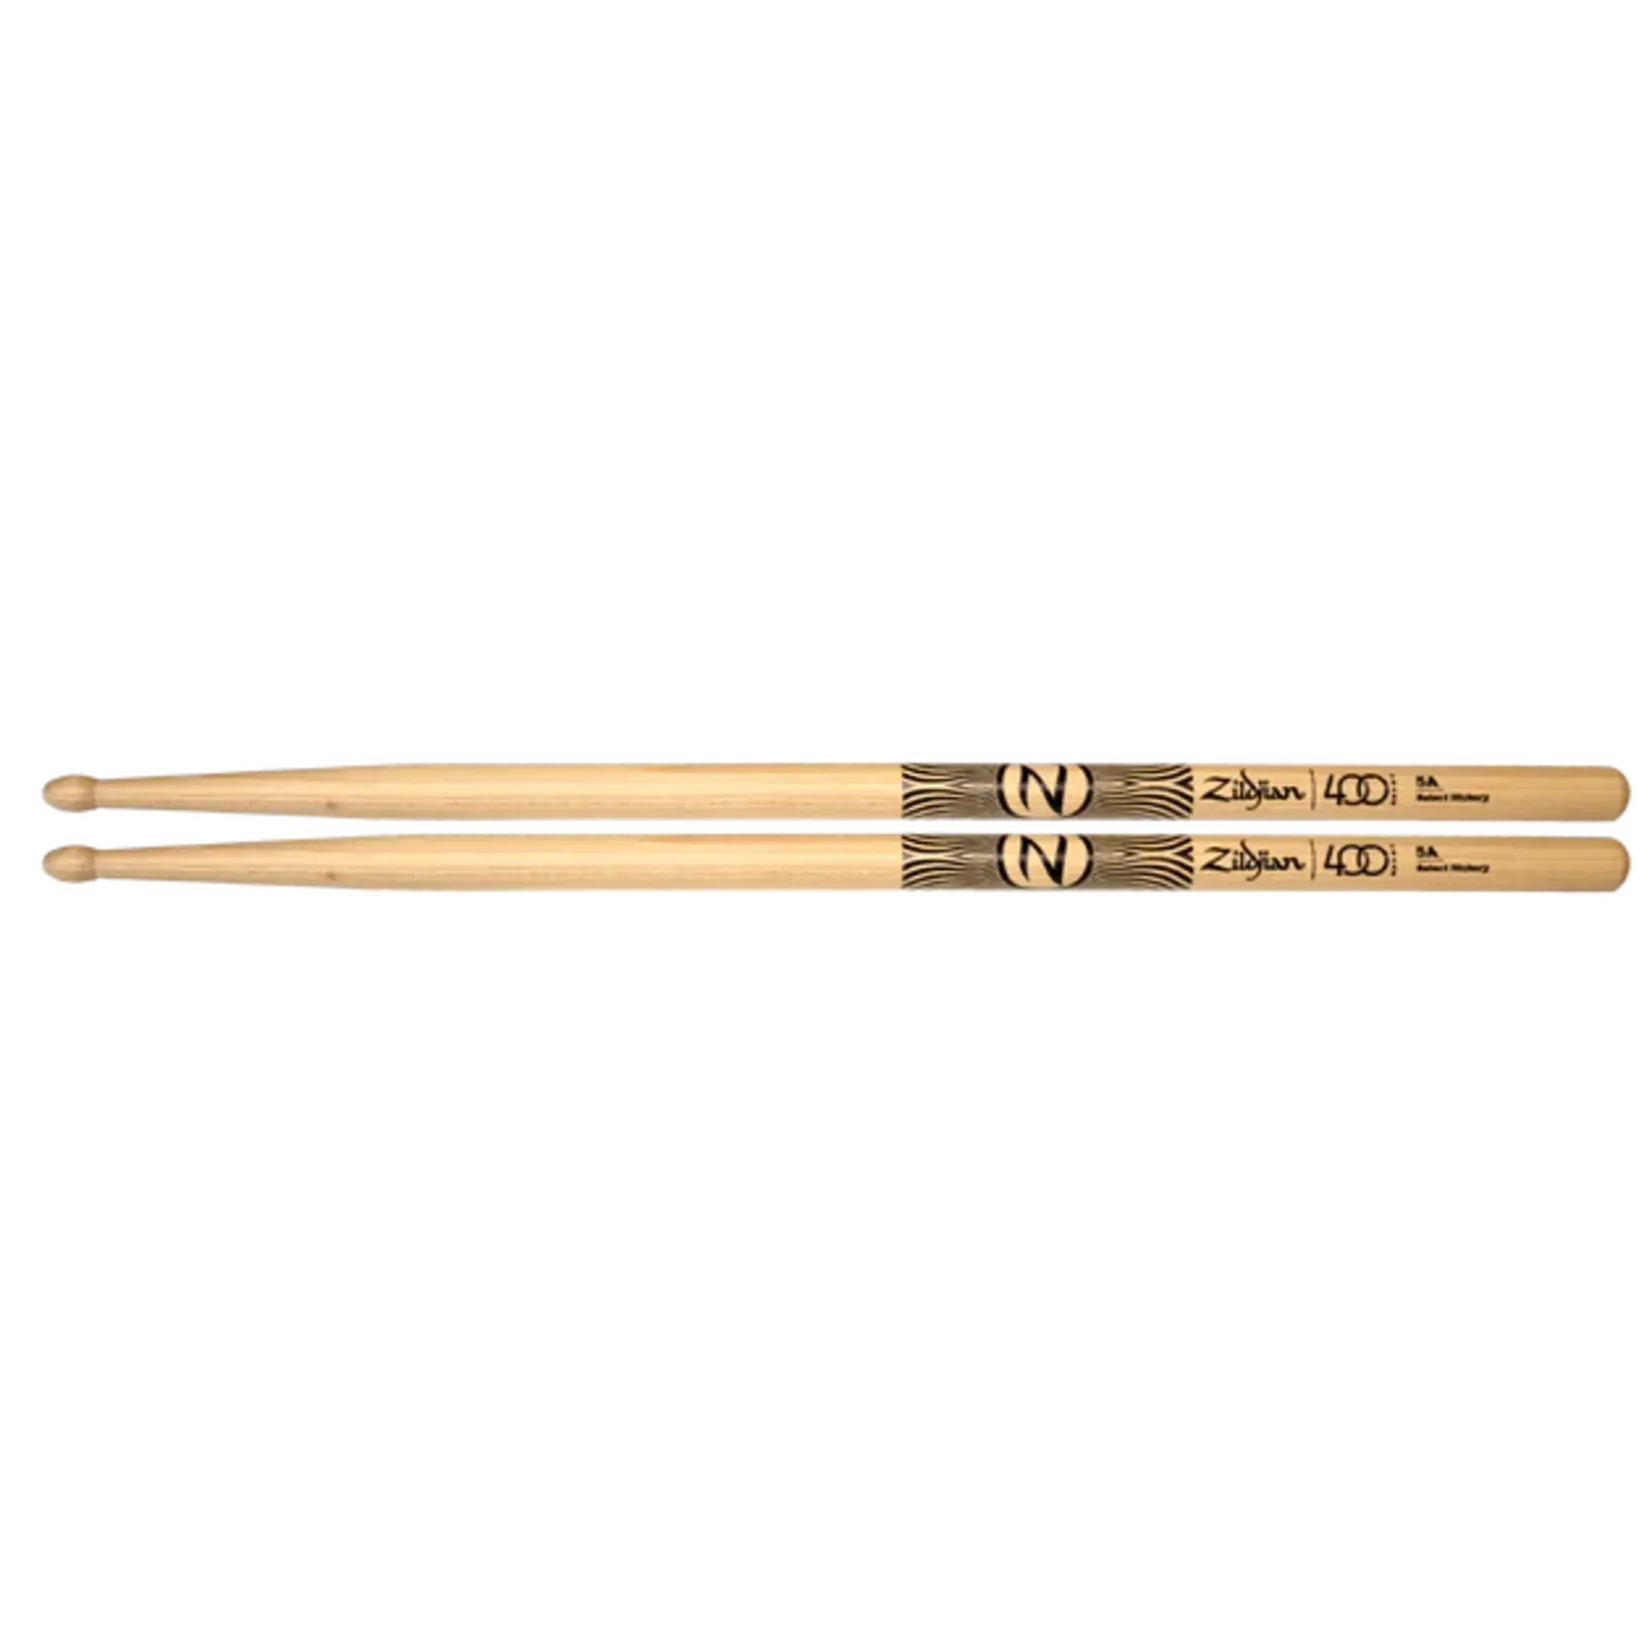 Zildjian Zildjian Limited Edition 400th Anniversary 5A Drumsticks